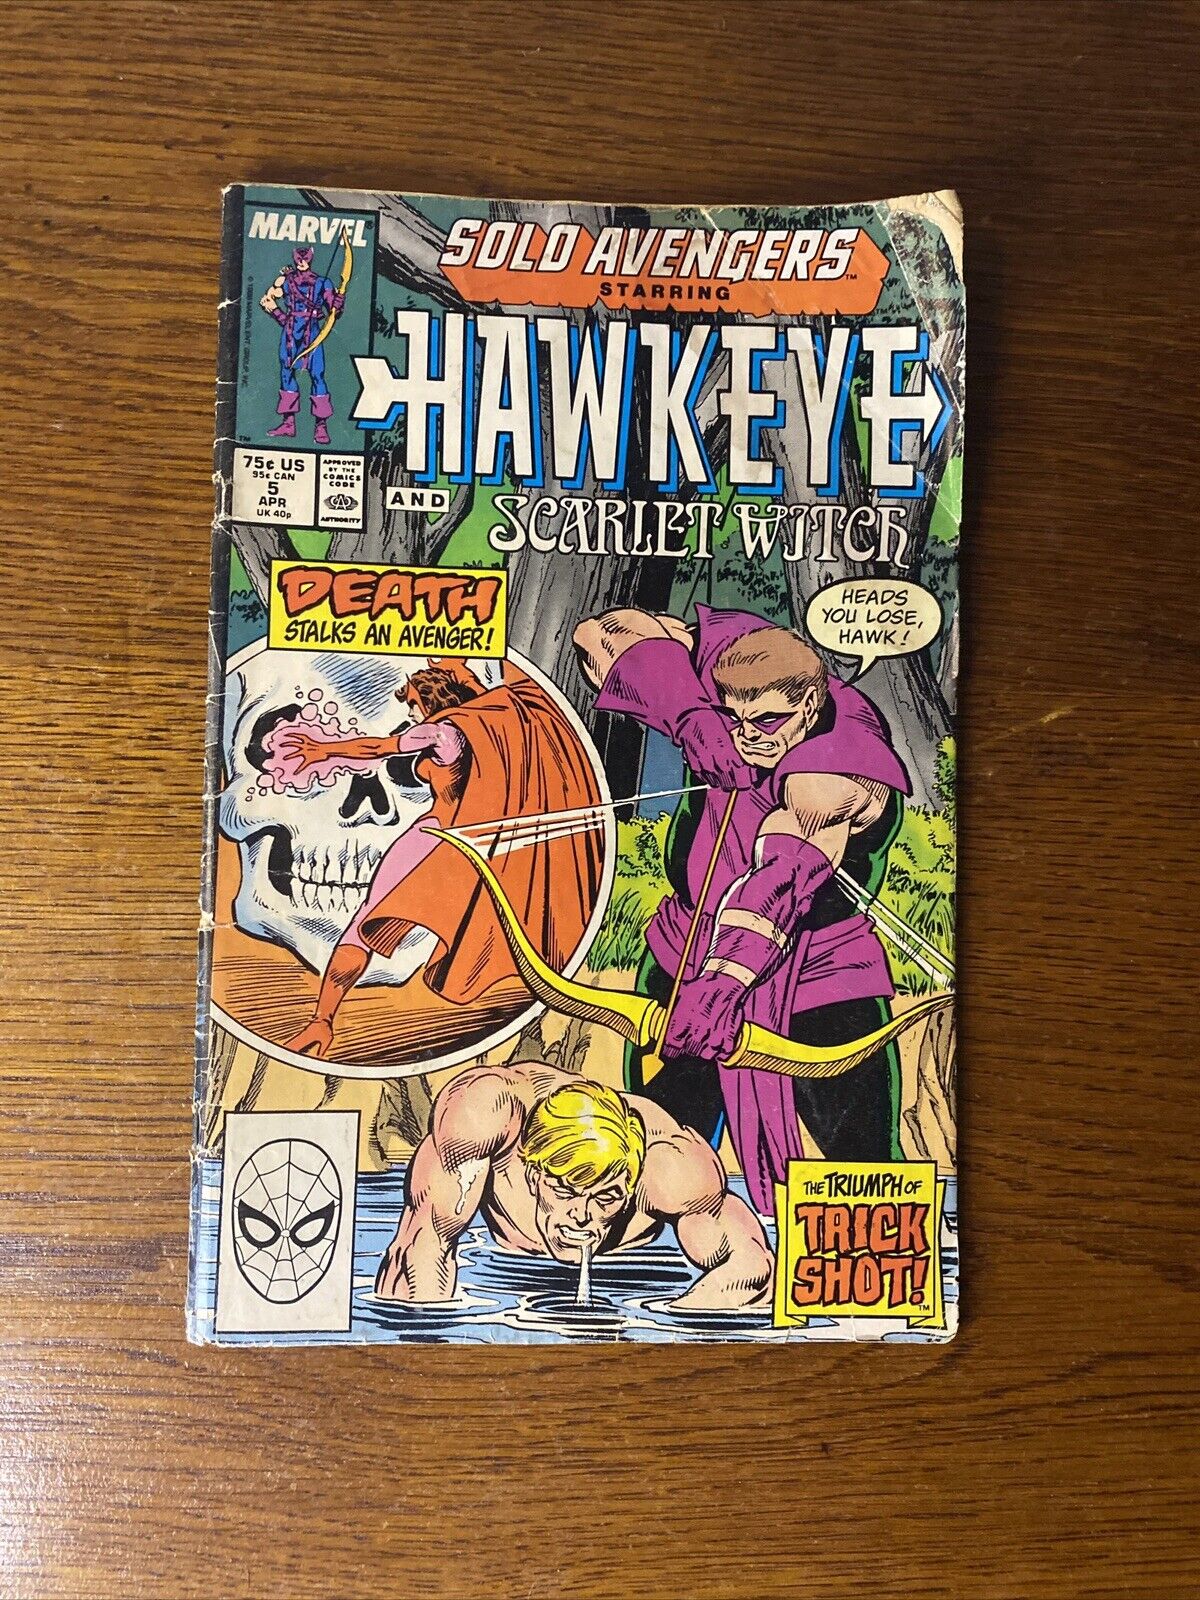 Solo Avengers #5 (Marvel Comics April 1988)